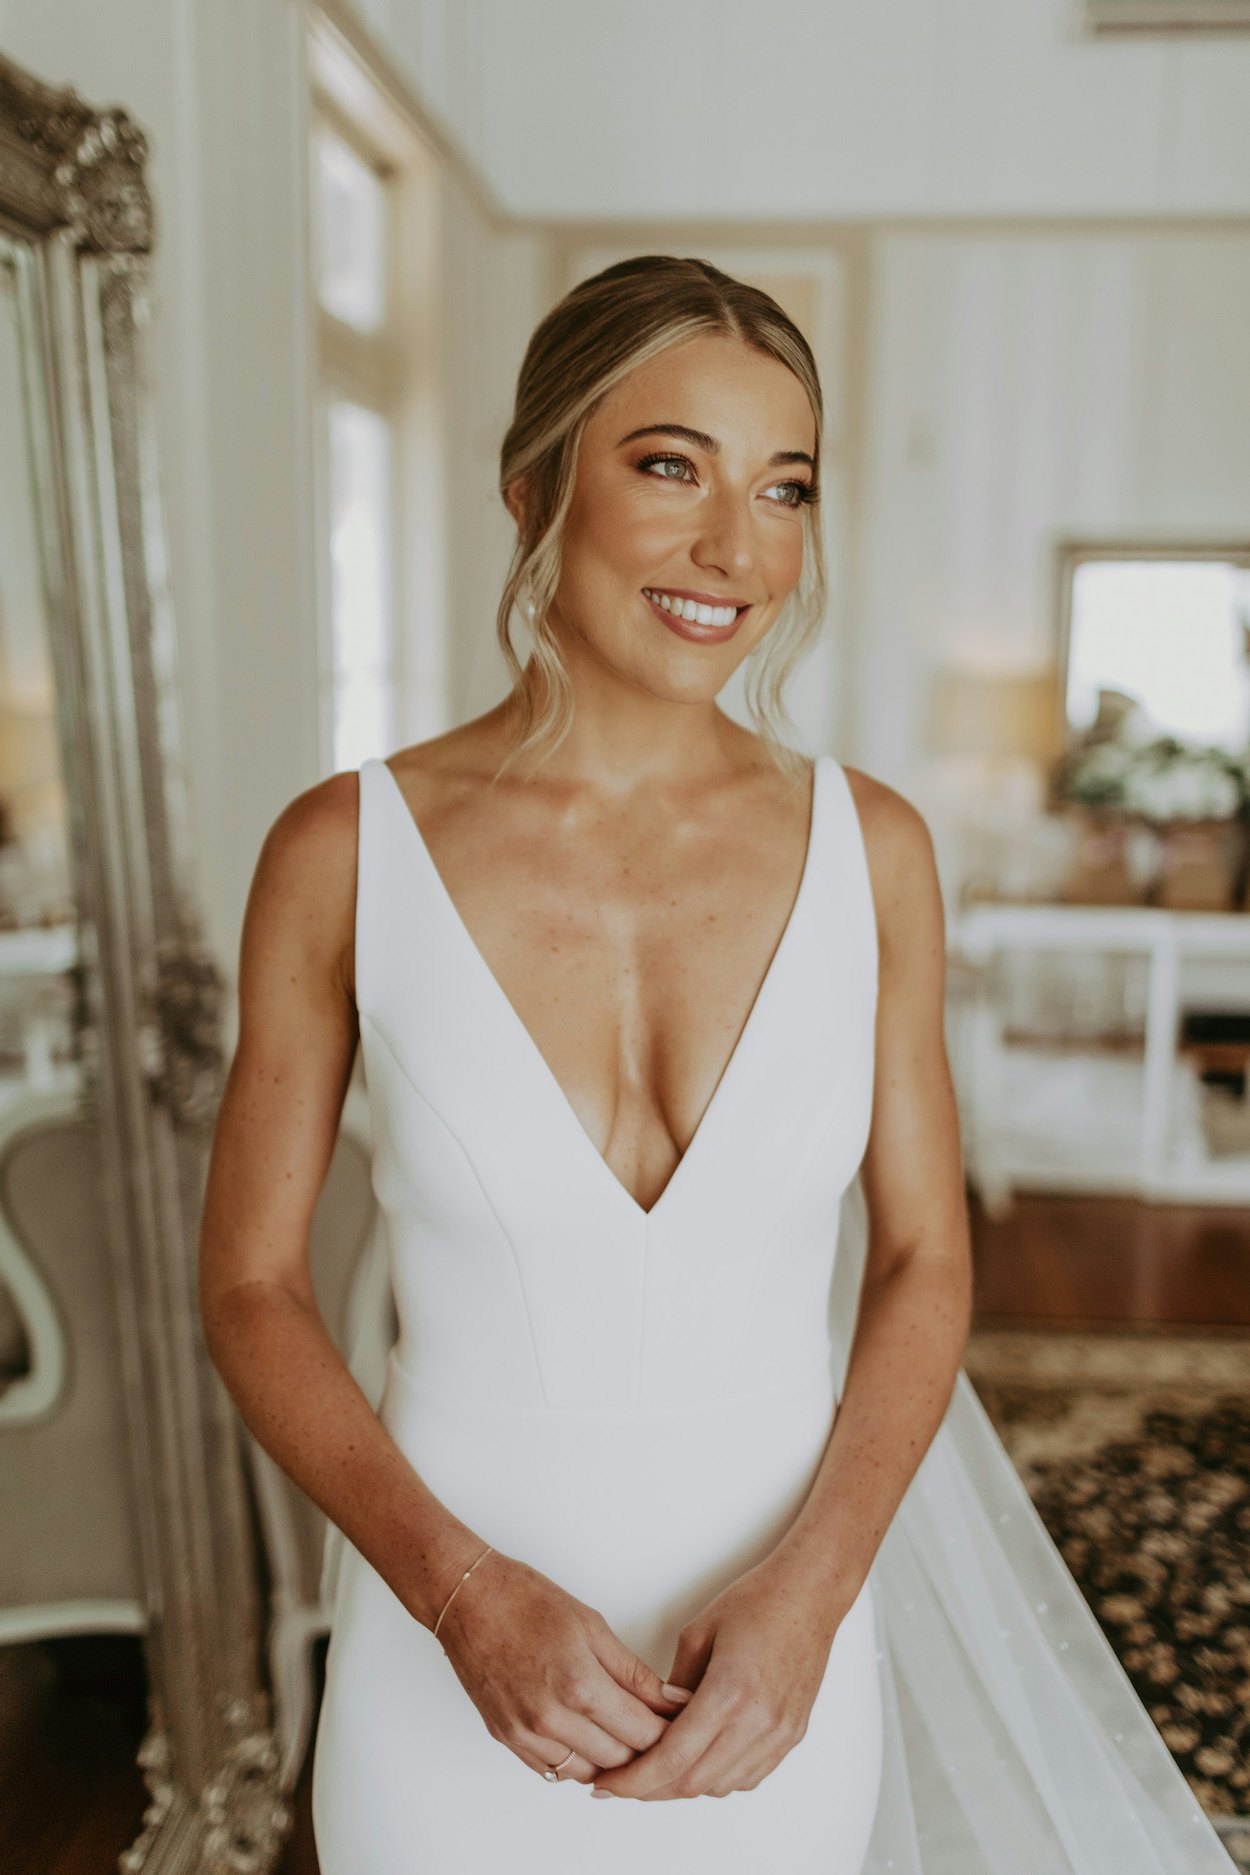 Bride in wedding dress smiling 